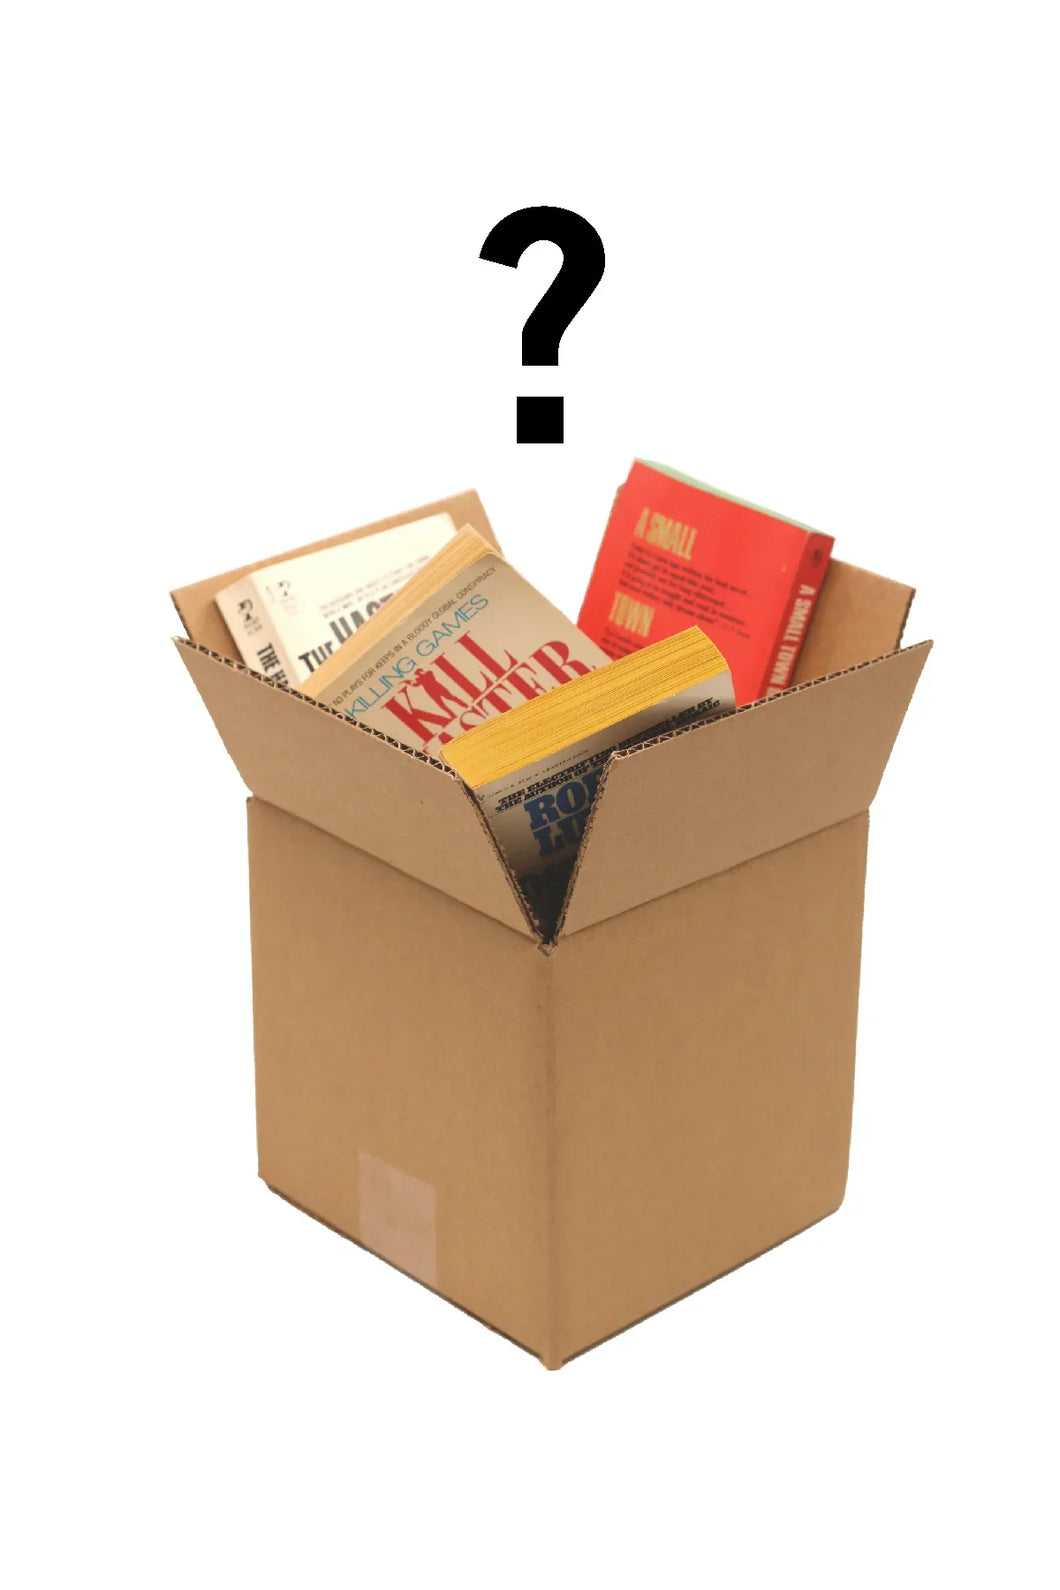 MILITARY NON-FICTION MYSTERY BOOK BOX